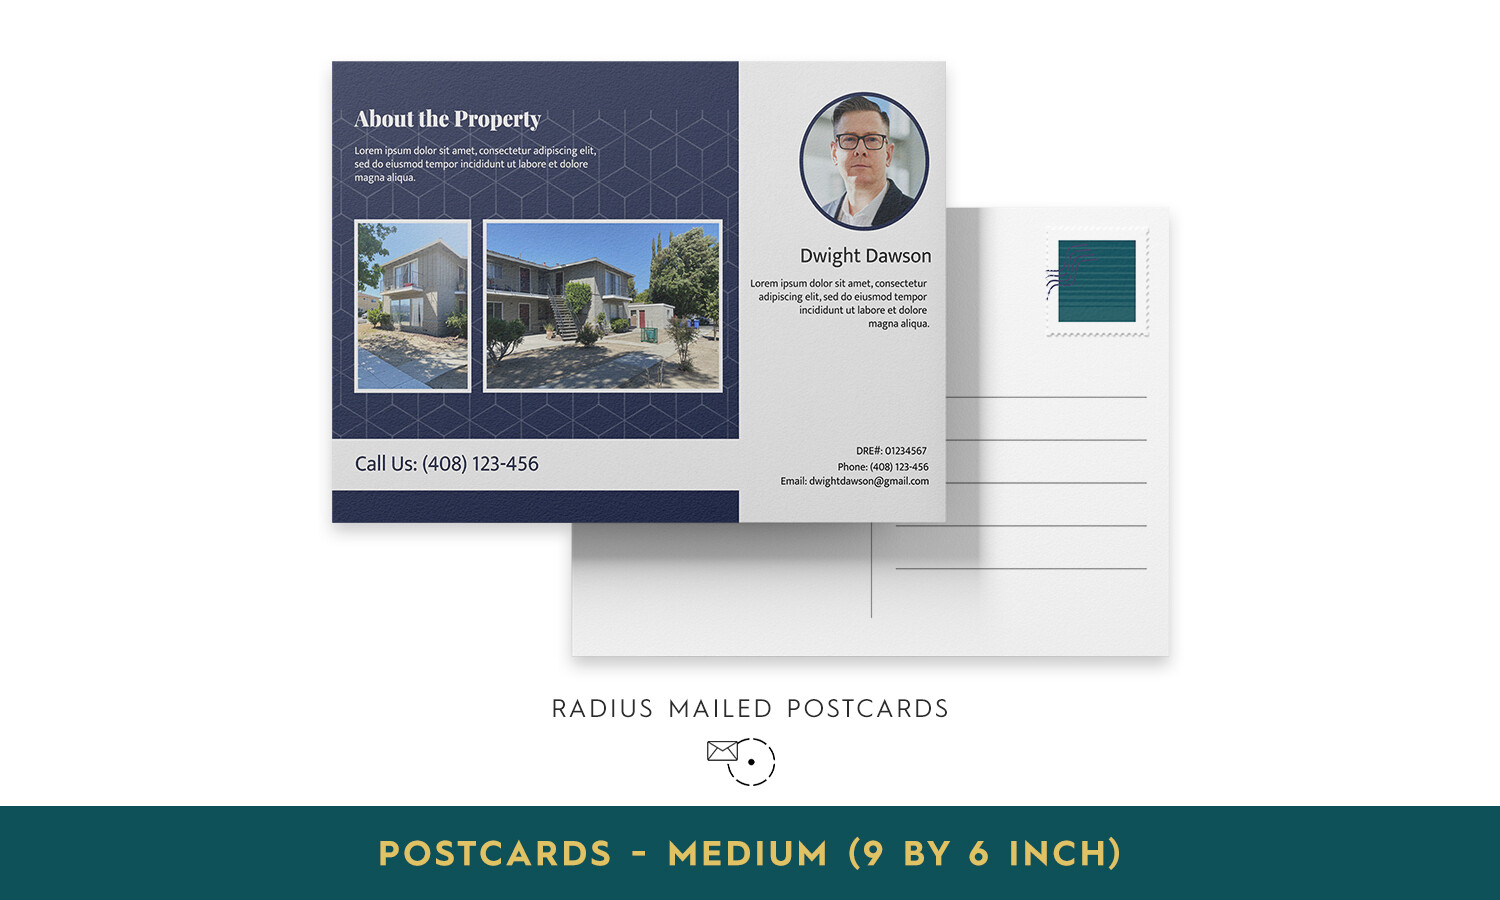 Radius Mailed Postcards - Medium